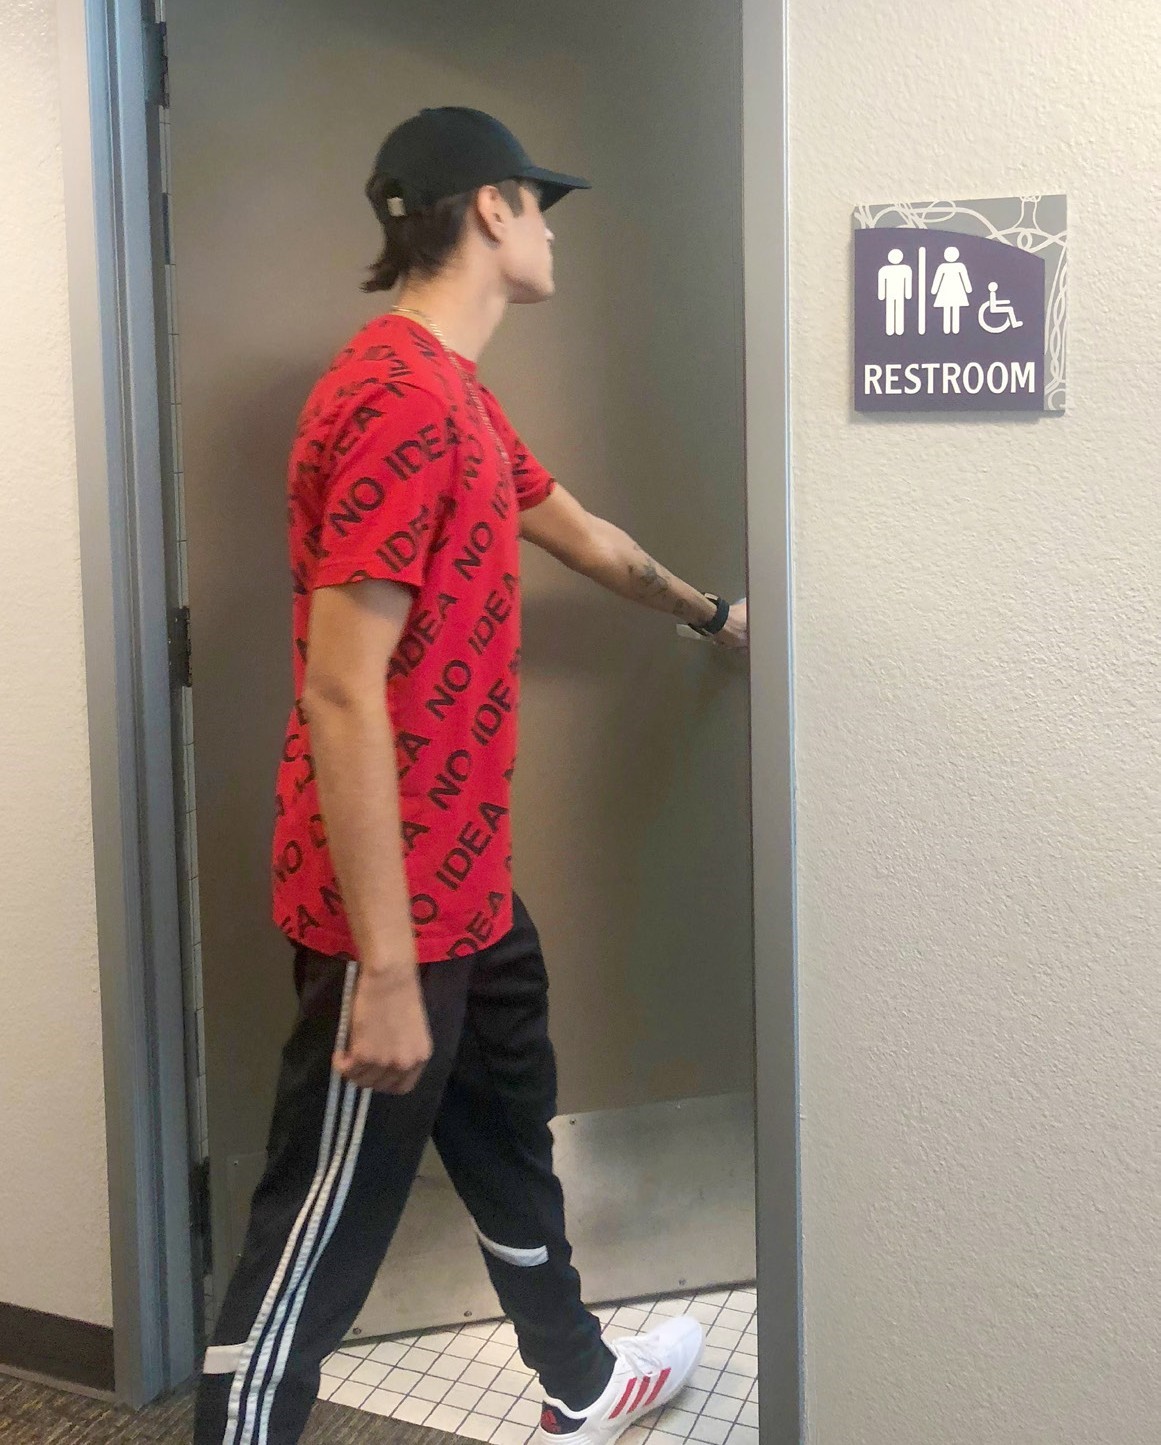 MCC offers gender neutral restrooms